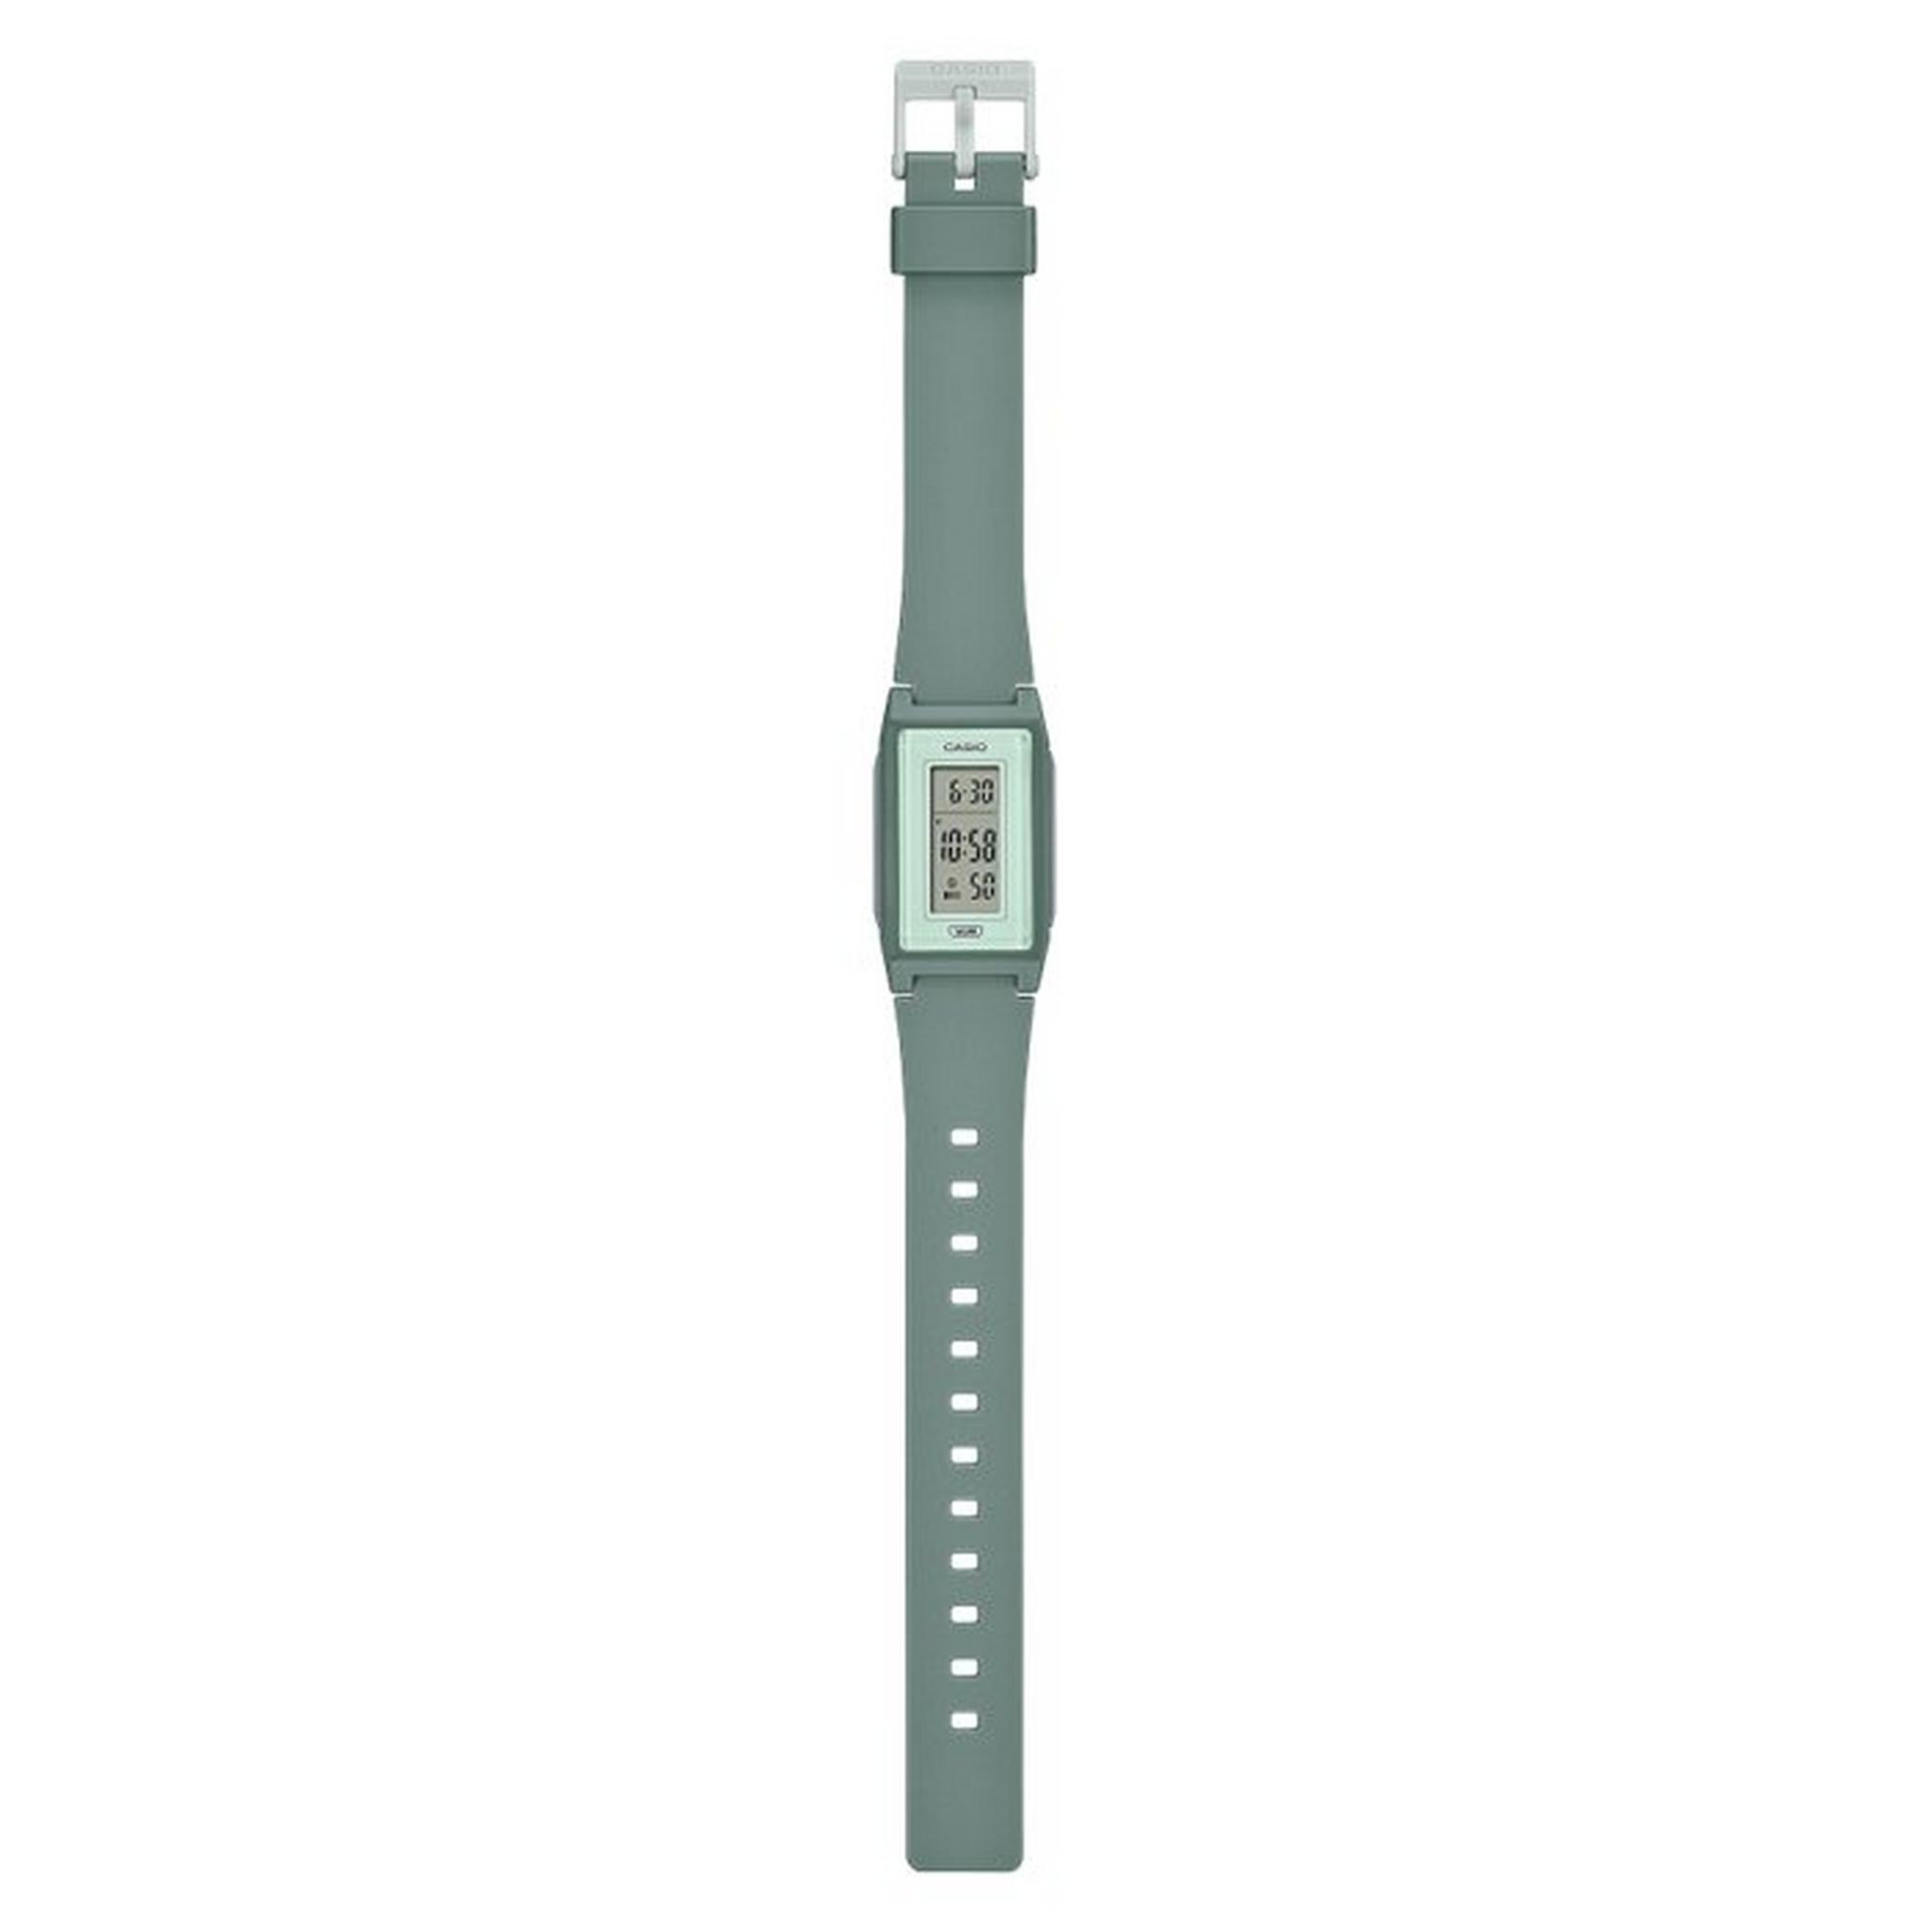 ساعة كاسيو جي أل يو كي موديل للنساء, ديجيتال, 41 مم, LF-10WH-3DF  – أخضر